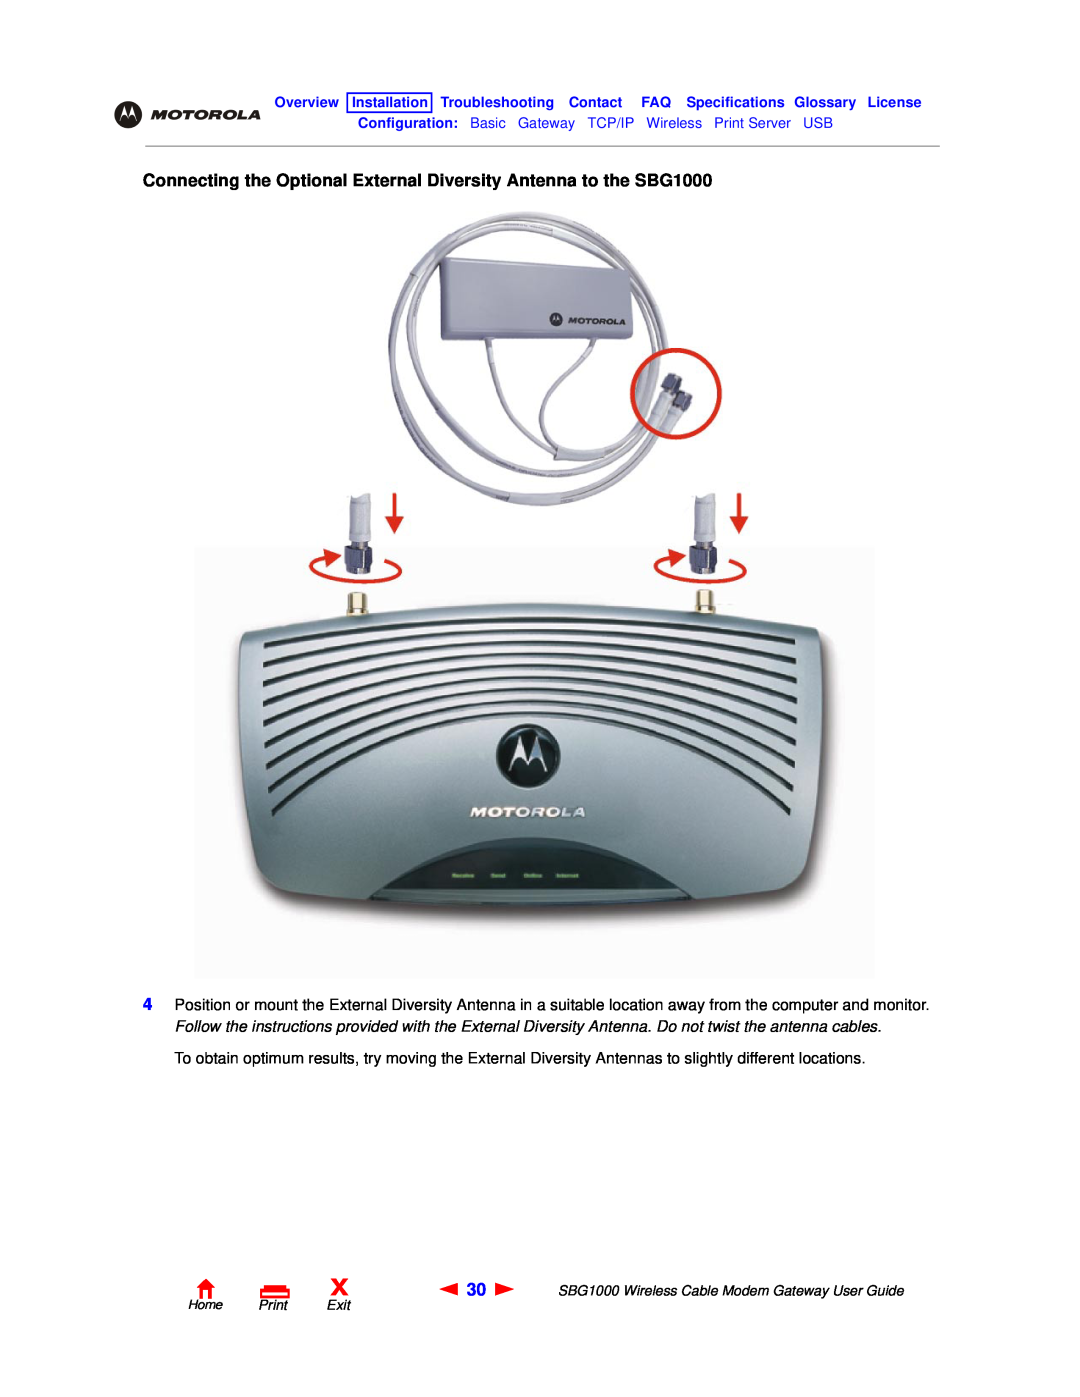 Motorola manual Connecting the Optional External Diversity Antenna to the SBG1000, Home Print Exit 